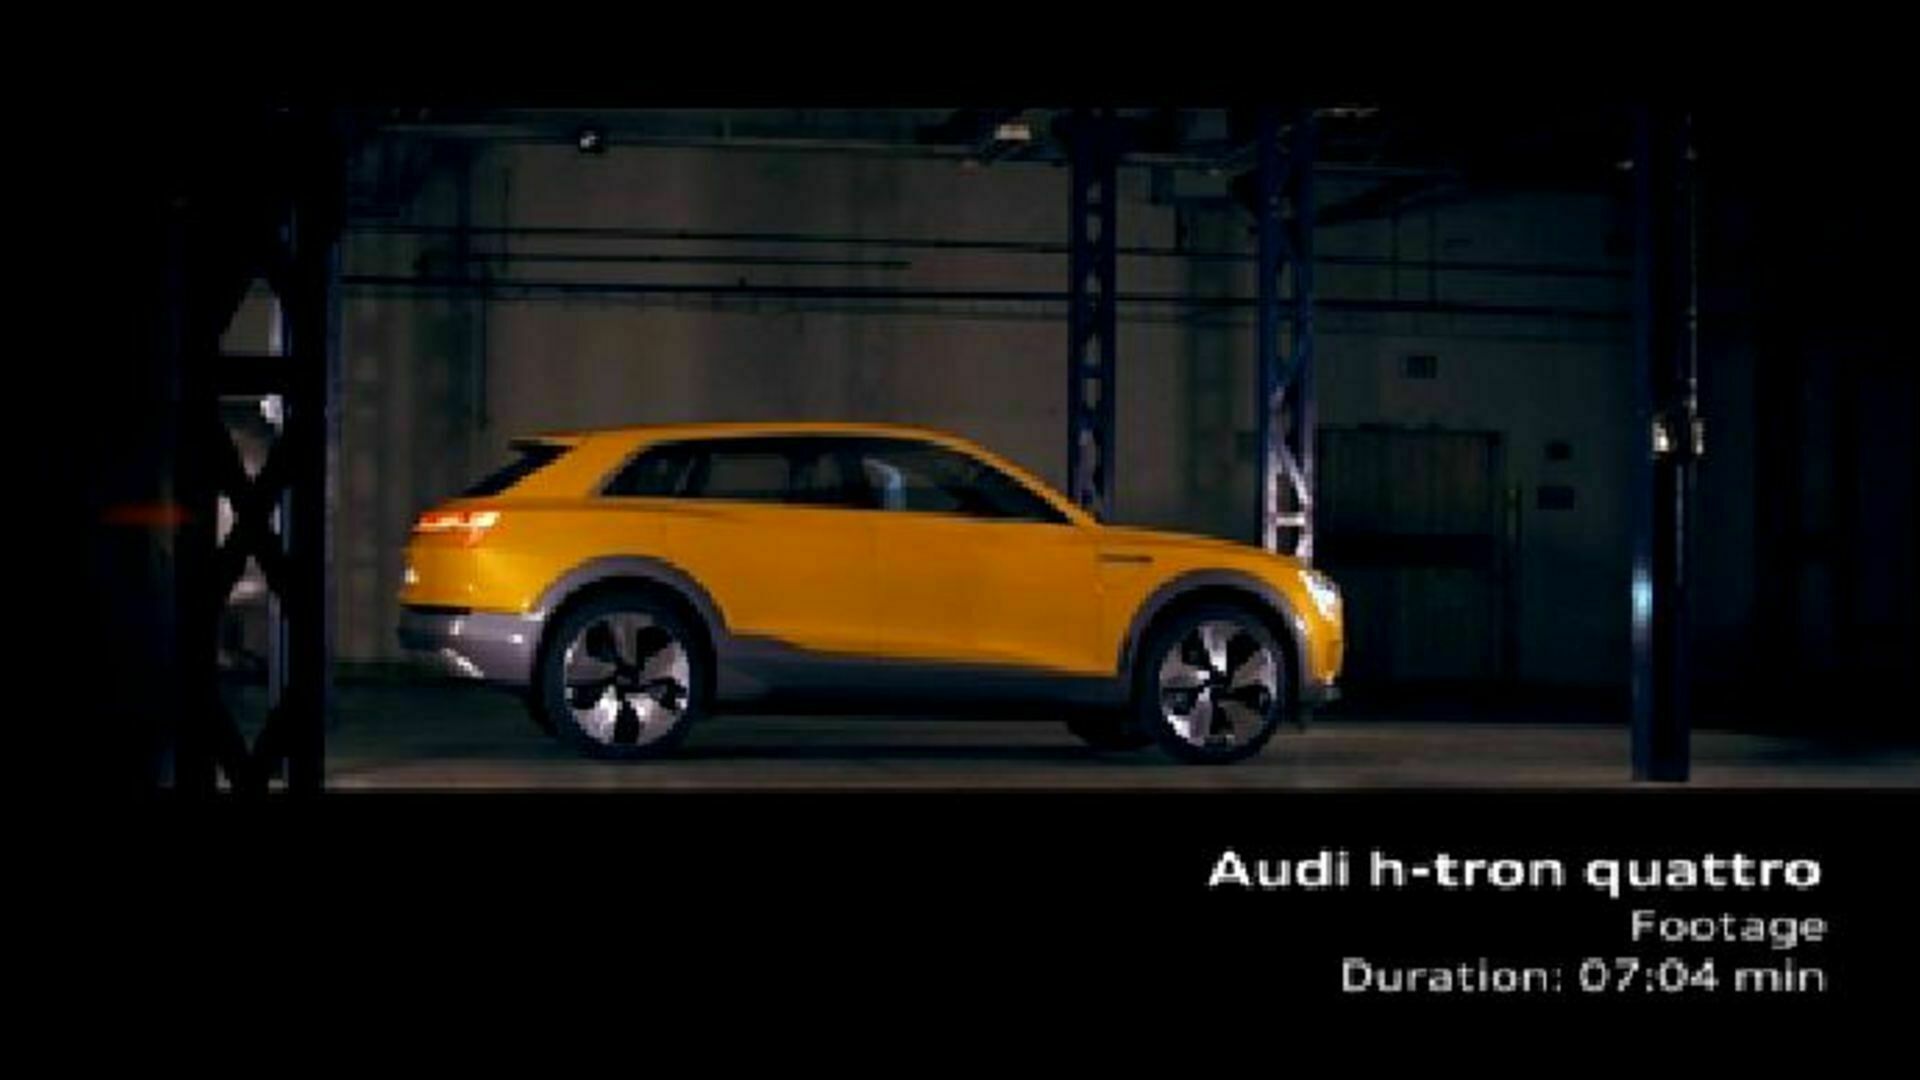 Audi h-tron quattro concept - Footage